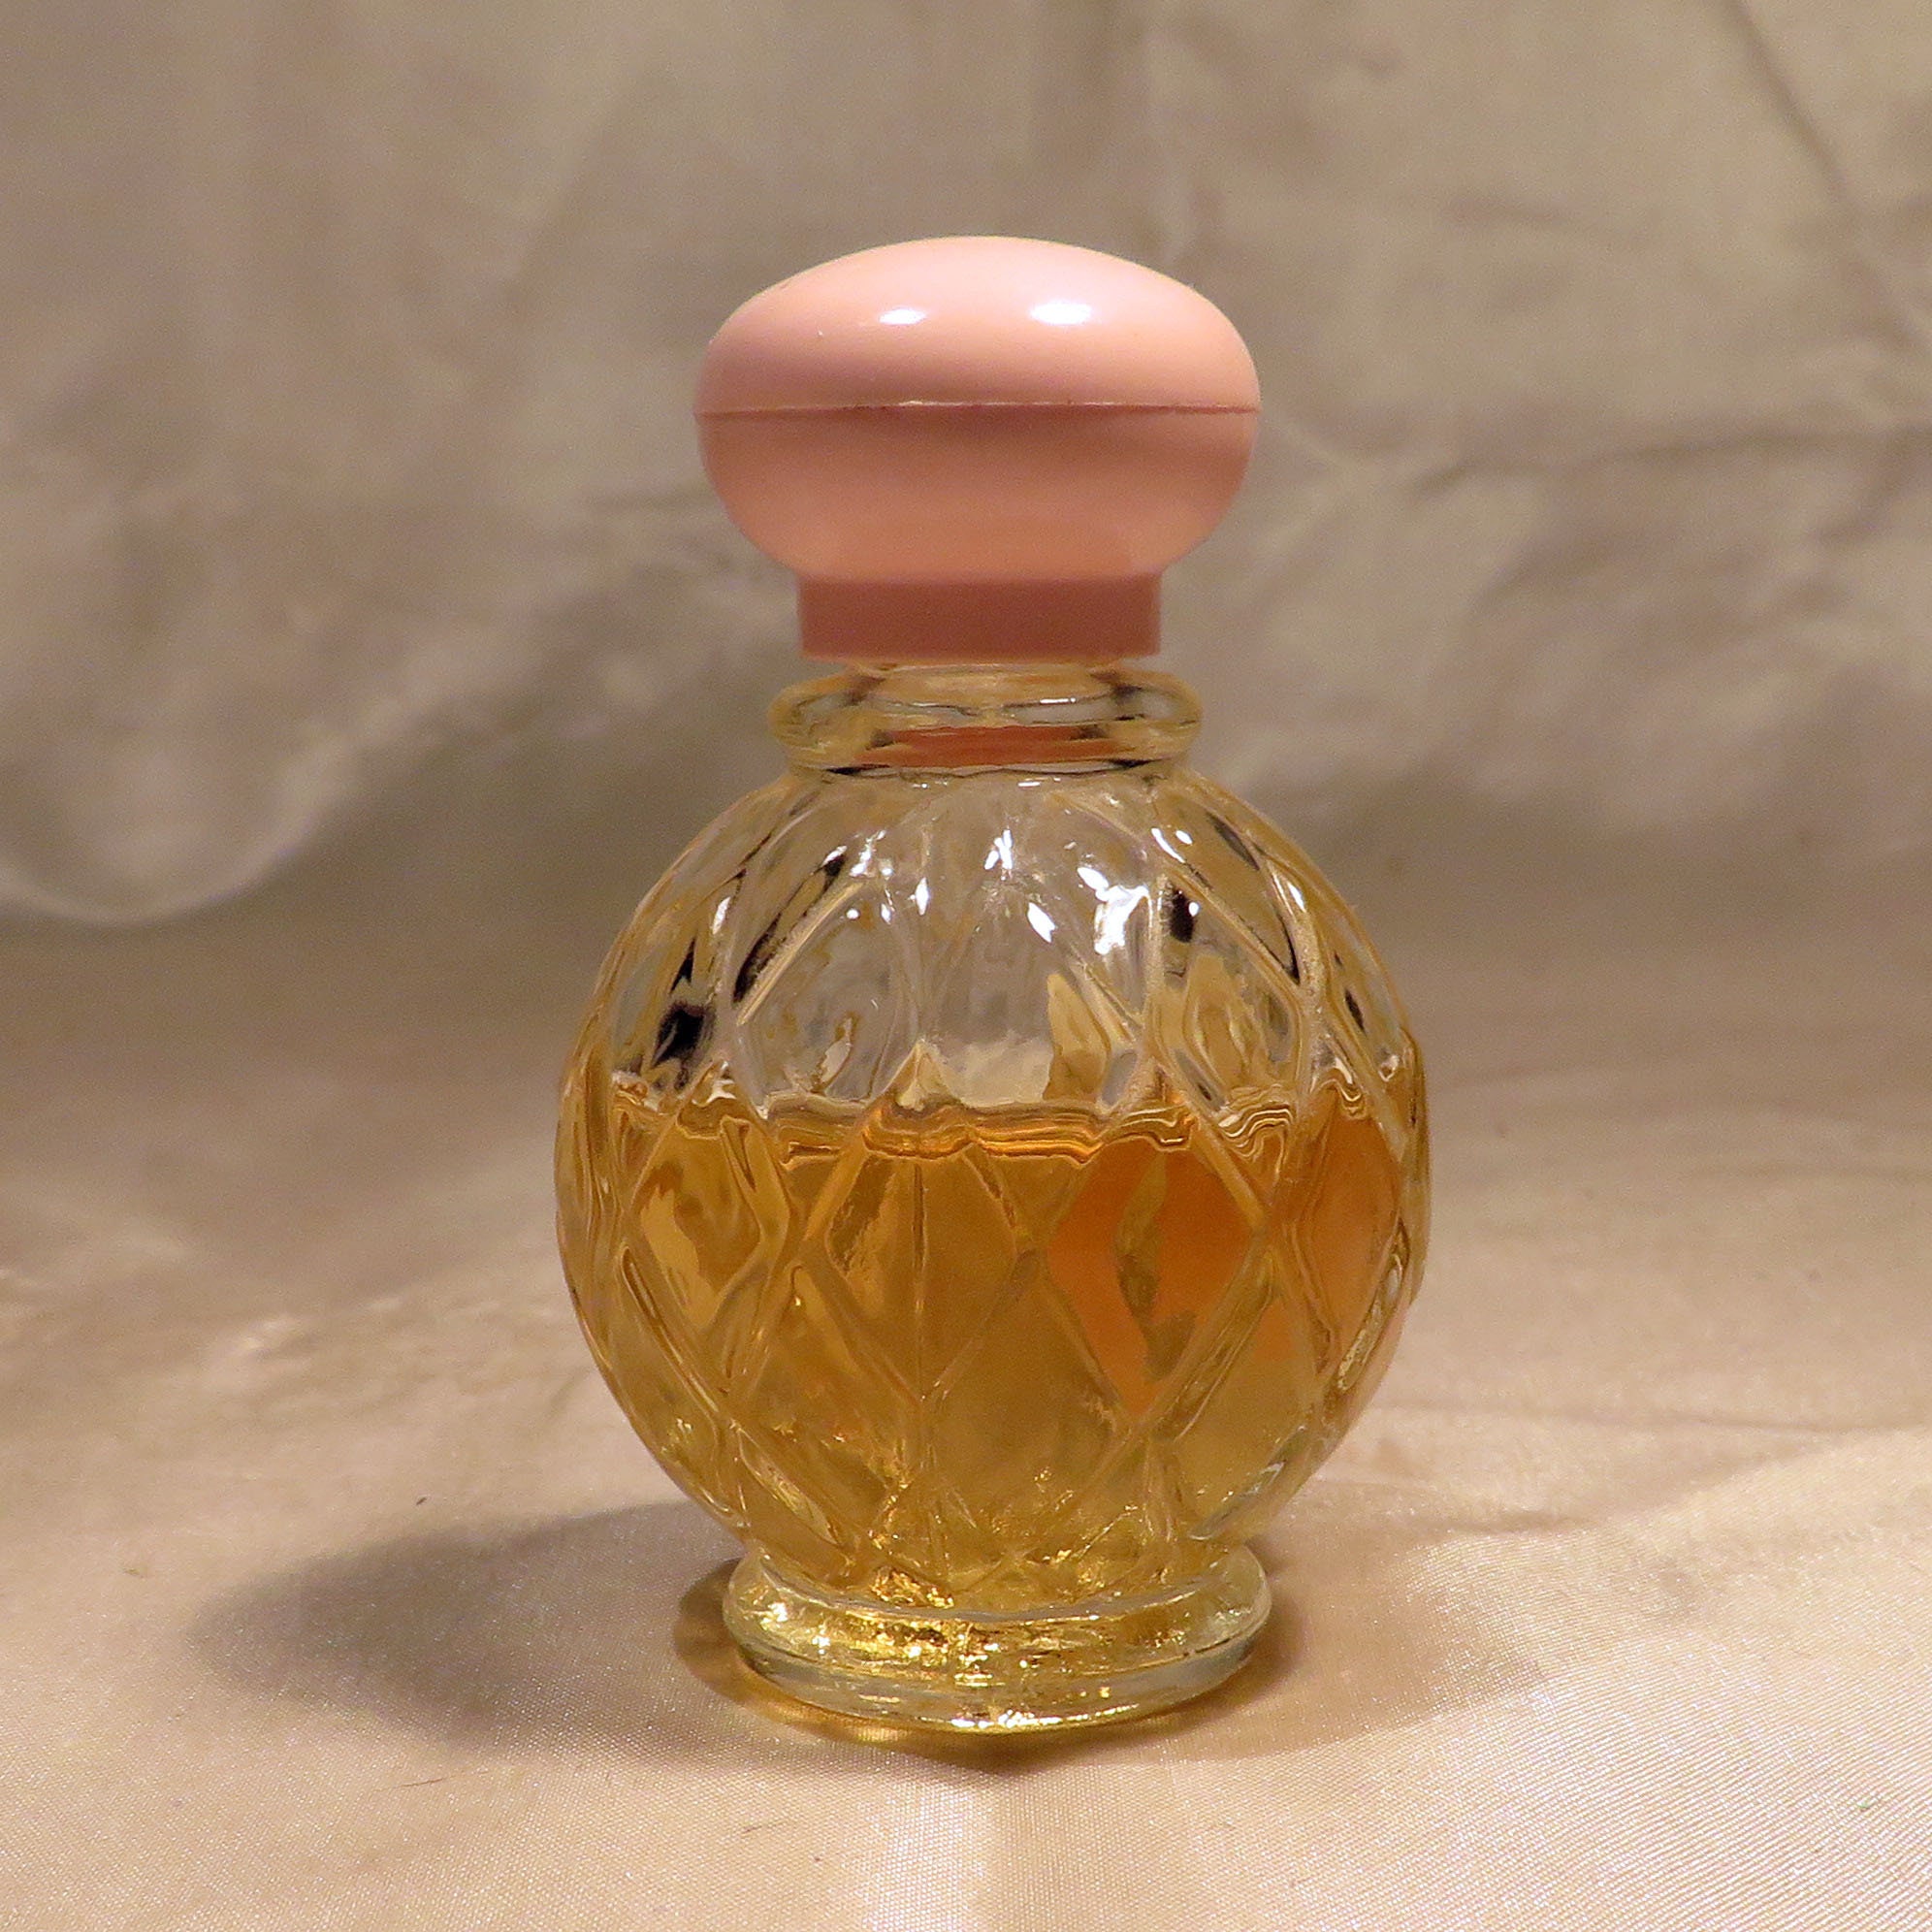 Avon Apple Blossom Cologne fragrance perfume See photo for | Etsy